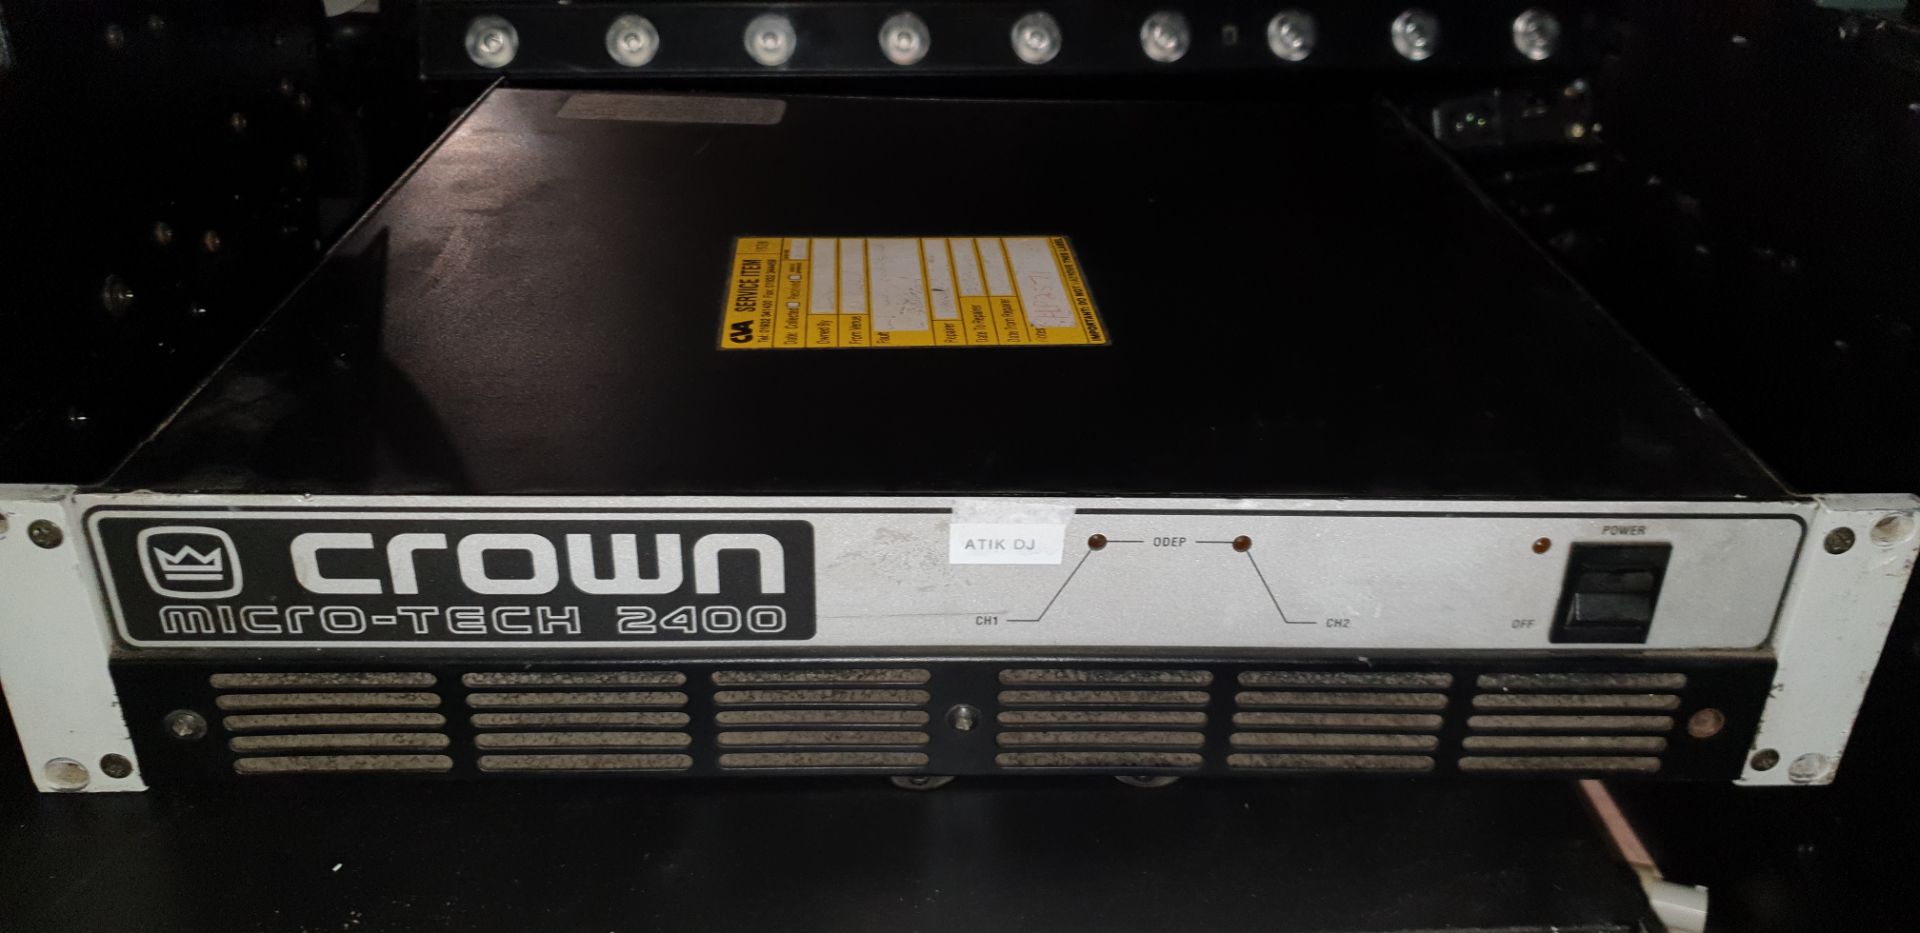 1 ; Crown Macro-Tech 2400 Stereo Power Amplifier.